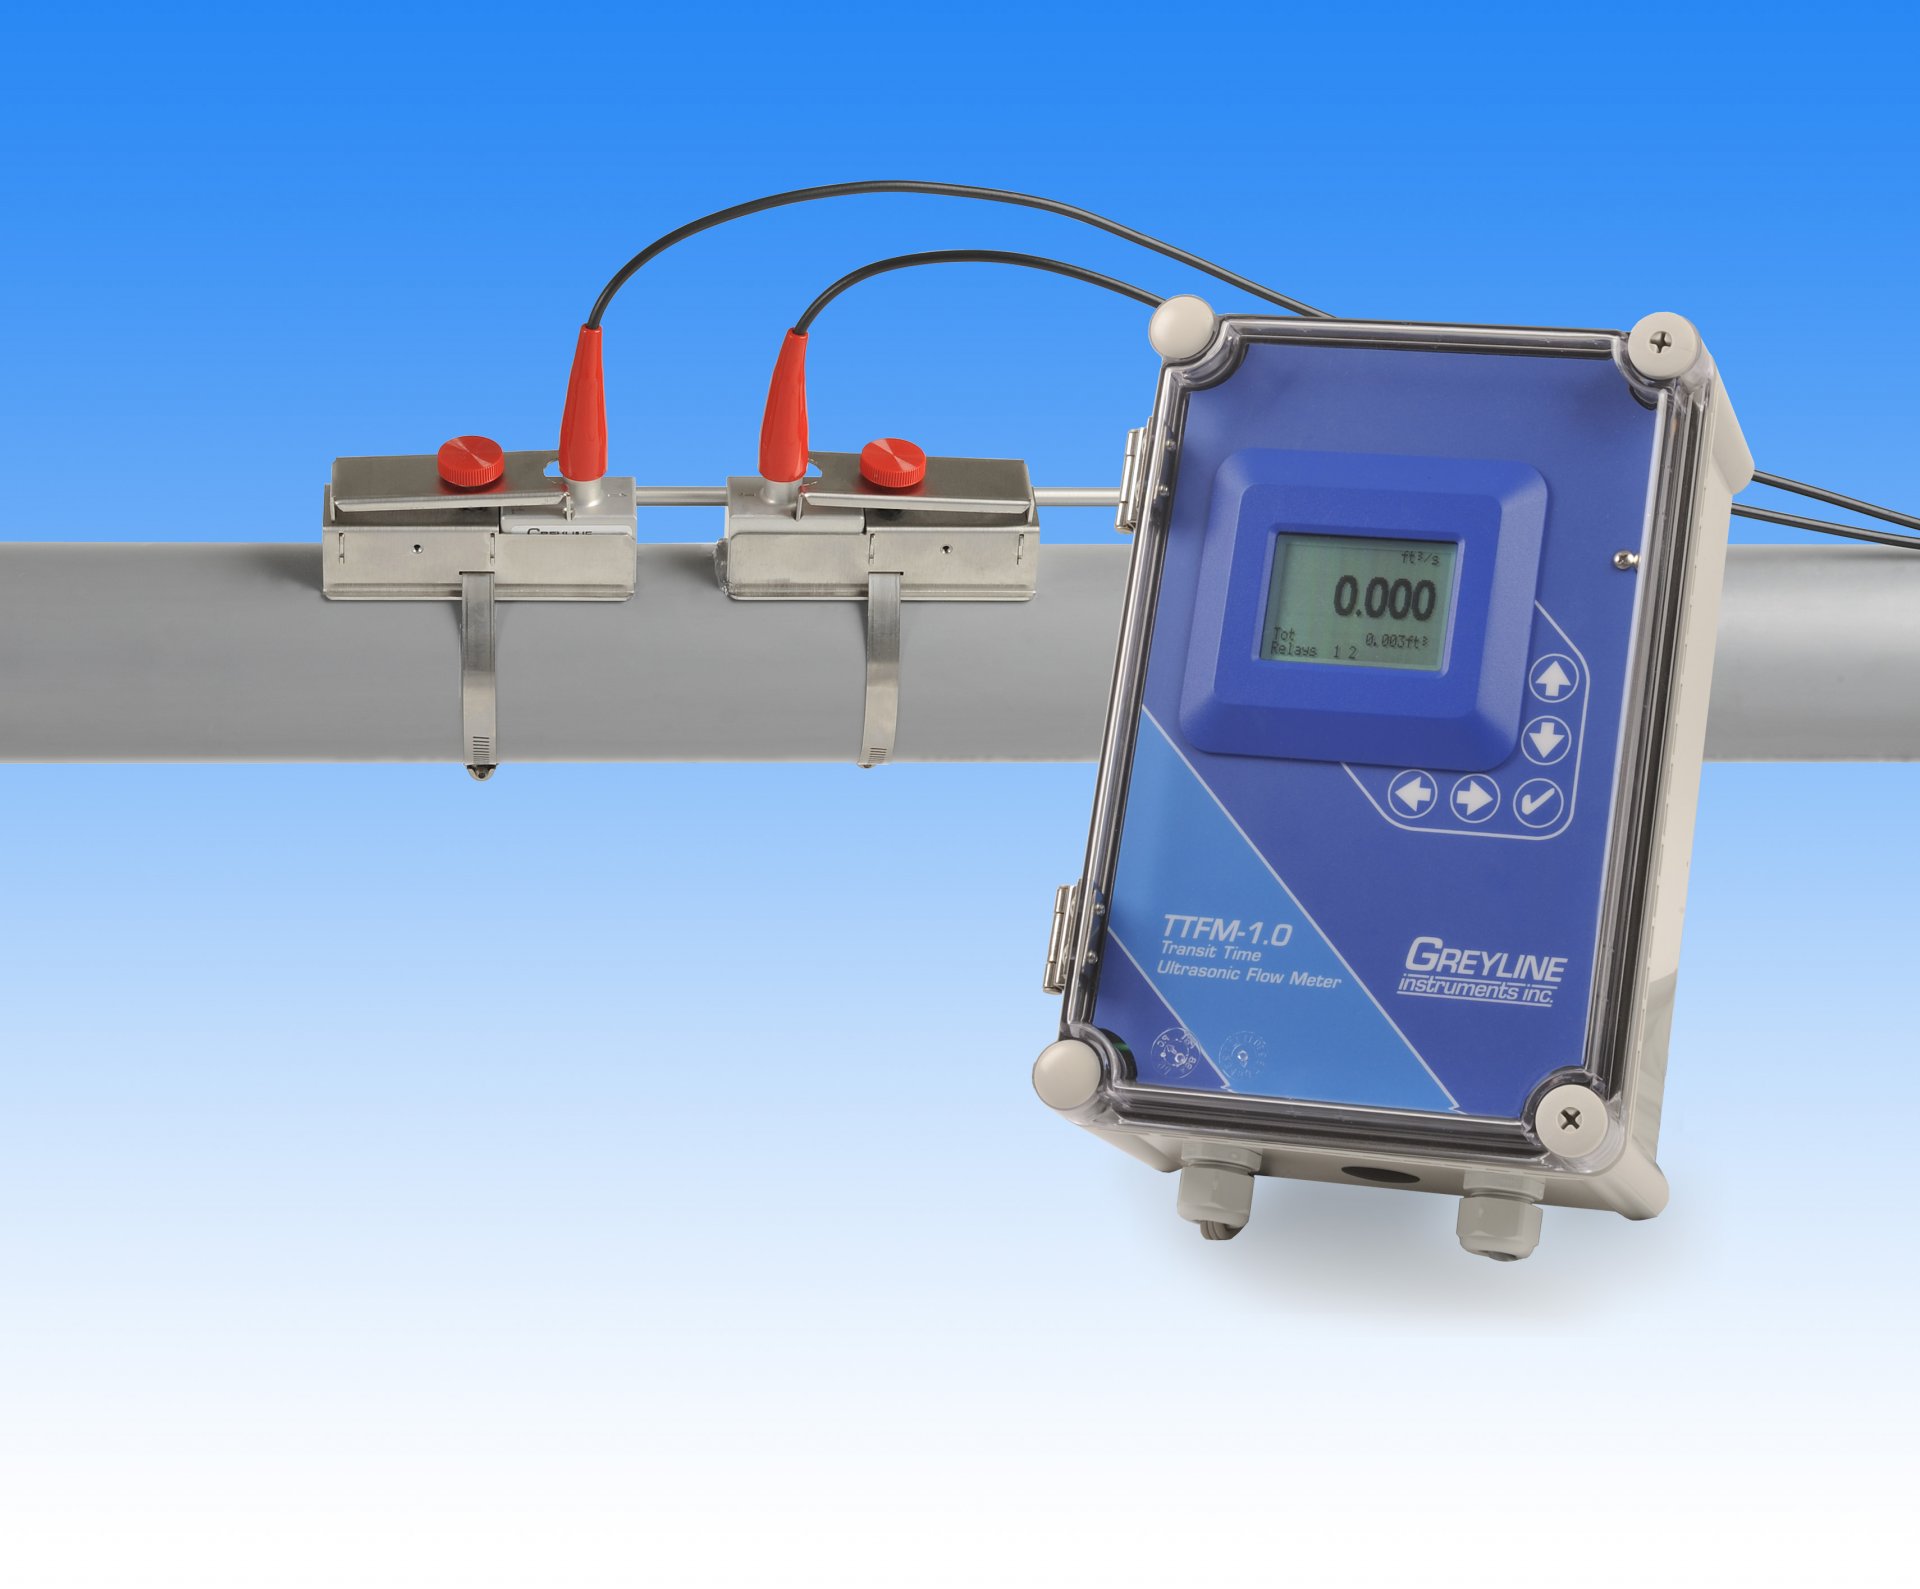 TTFM 1.0 Transit Time Flowmeter Greyline Instruments เครื่องวัดอัตราการไหลแบบอุลตร้าโซนิคชนิดรัดท่อ Ultrasonic Clamp On Flow Meter / ราคา